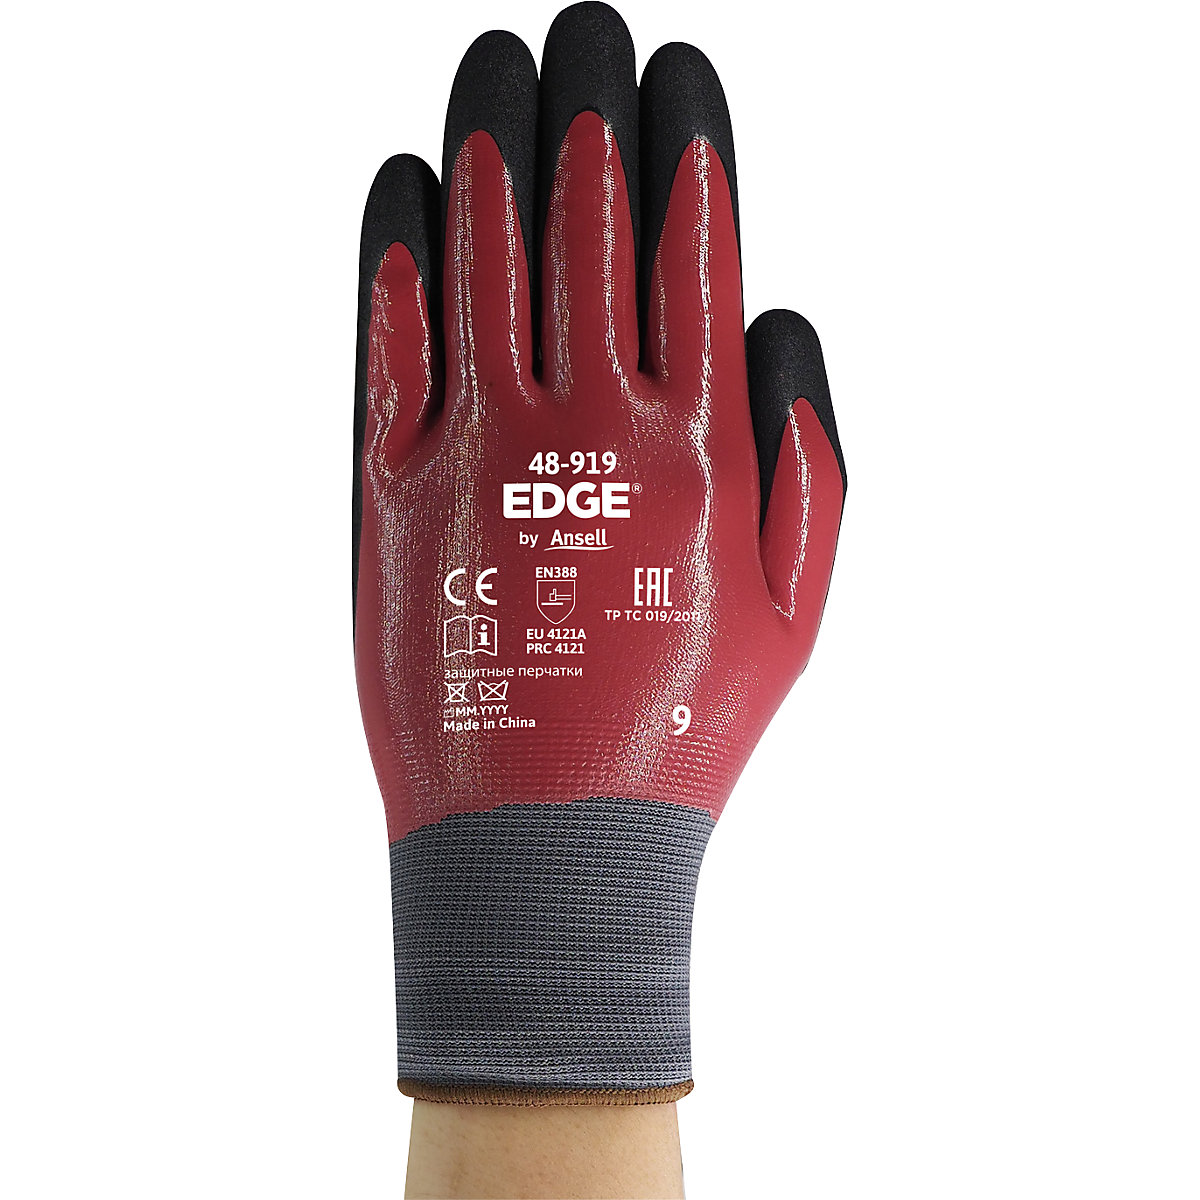 EDGE® 48-919 work gloves - Ansell